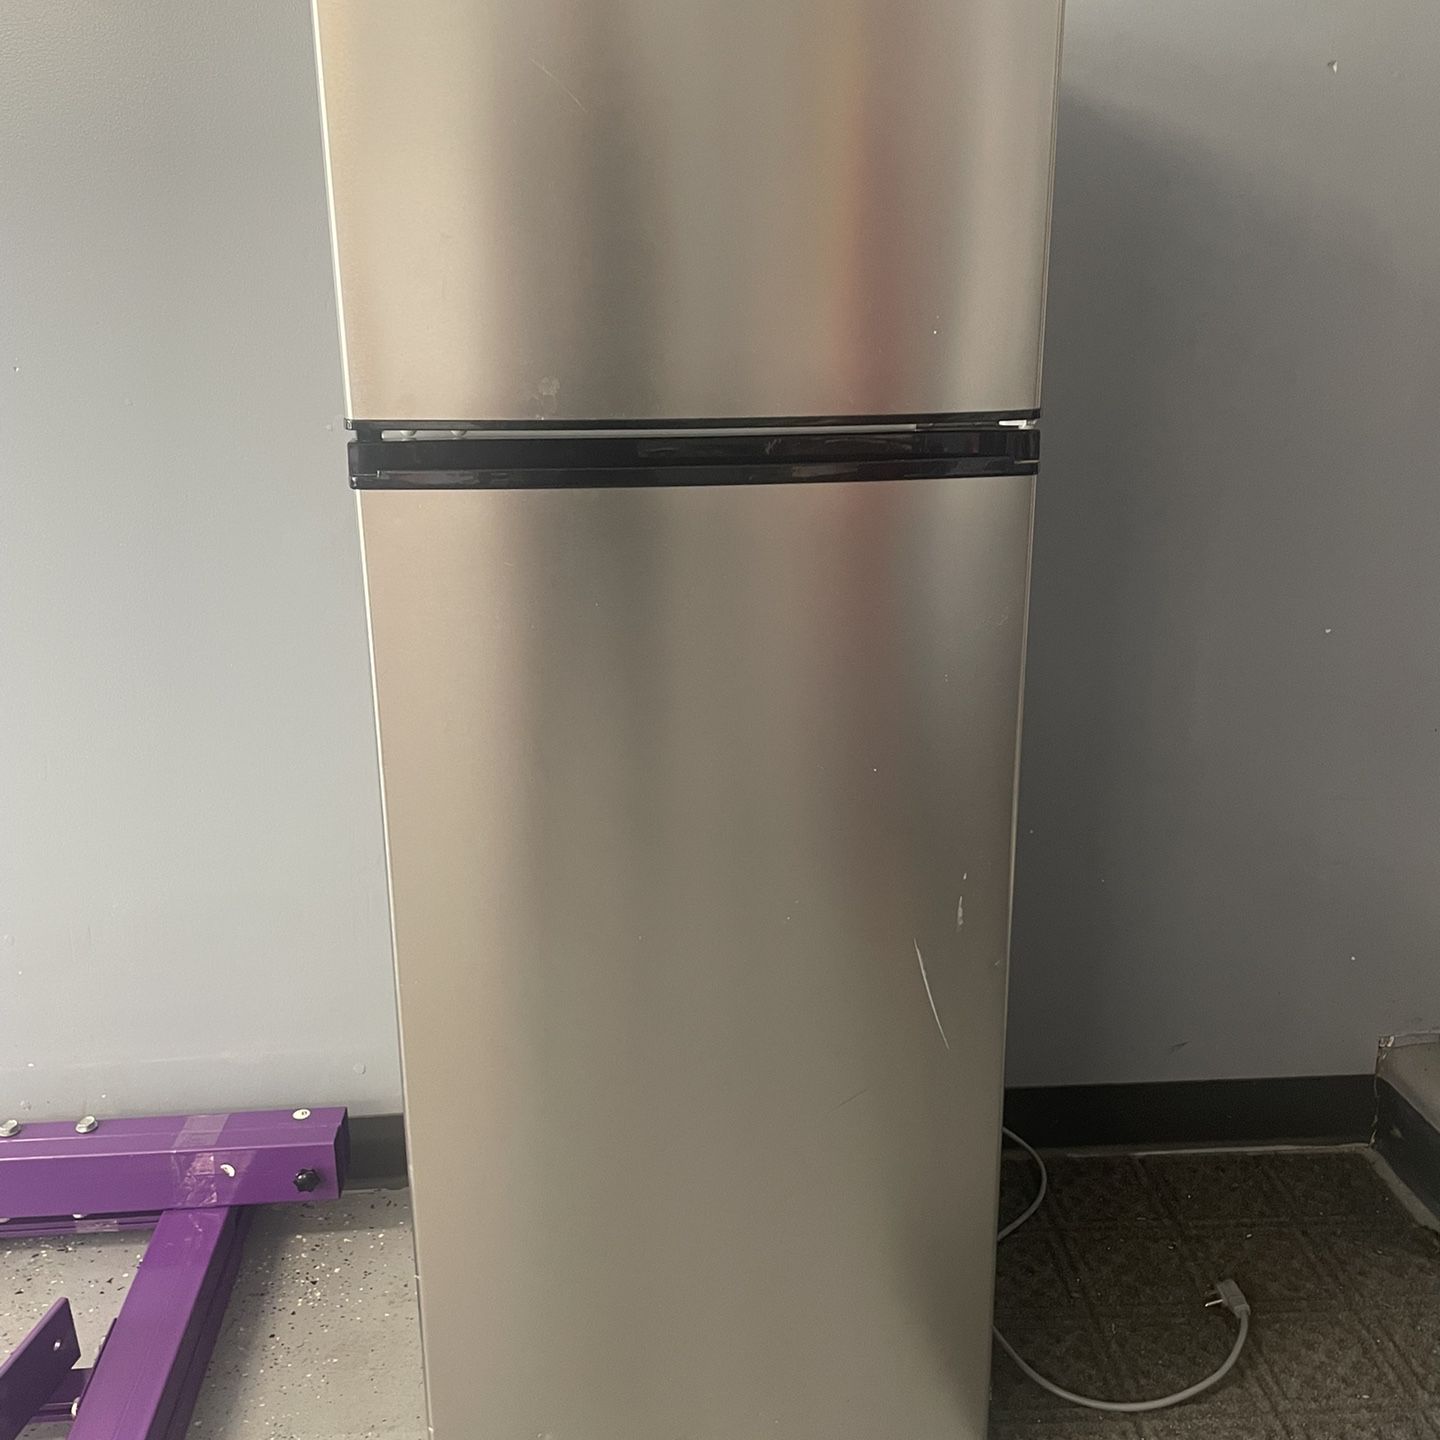 Top Freezer Refrigerator in Stainless Steel Look